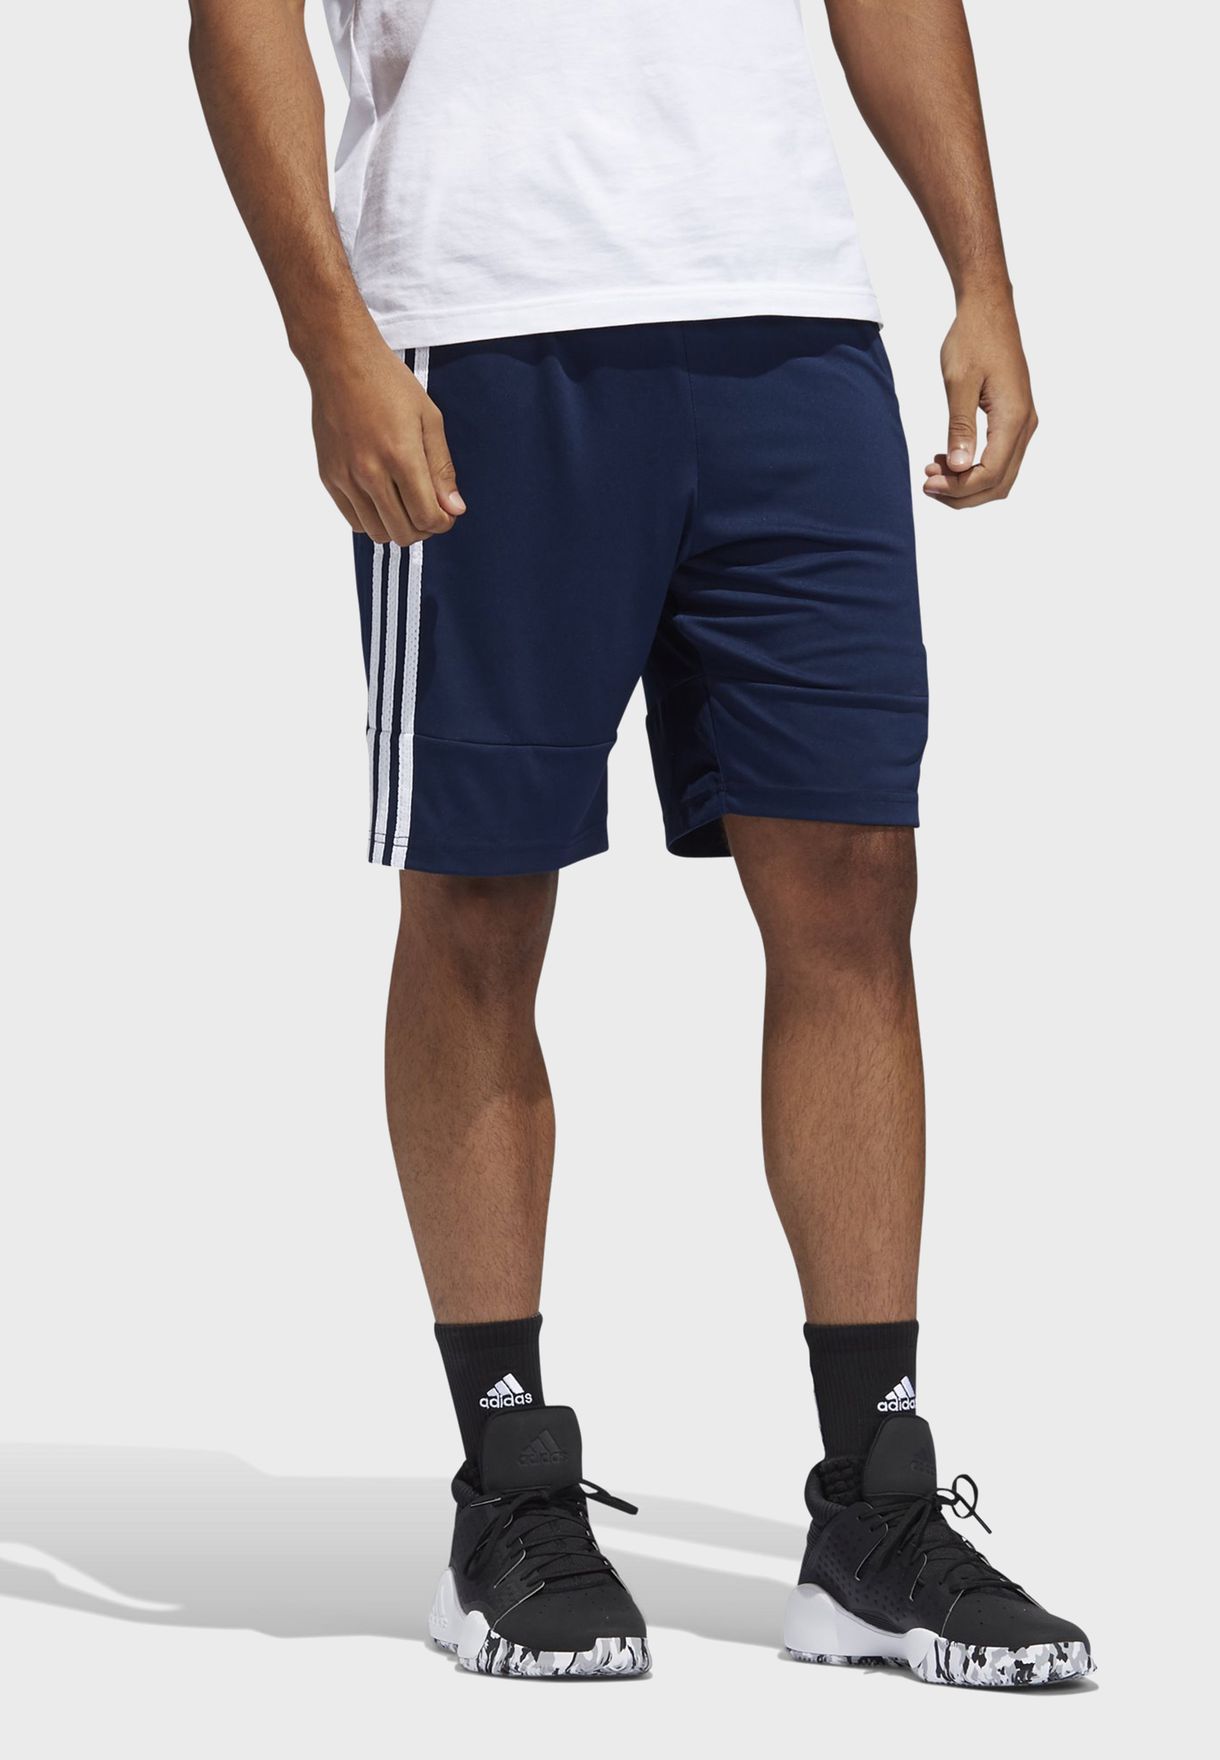 adidas men's 3g speed x shorts